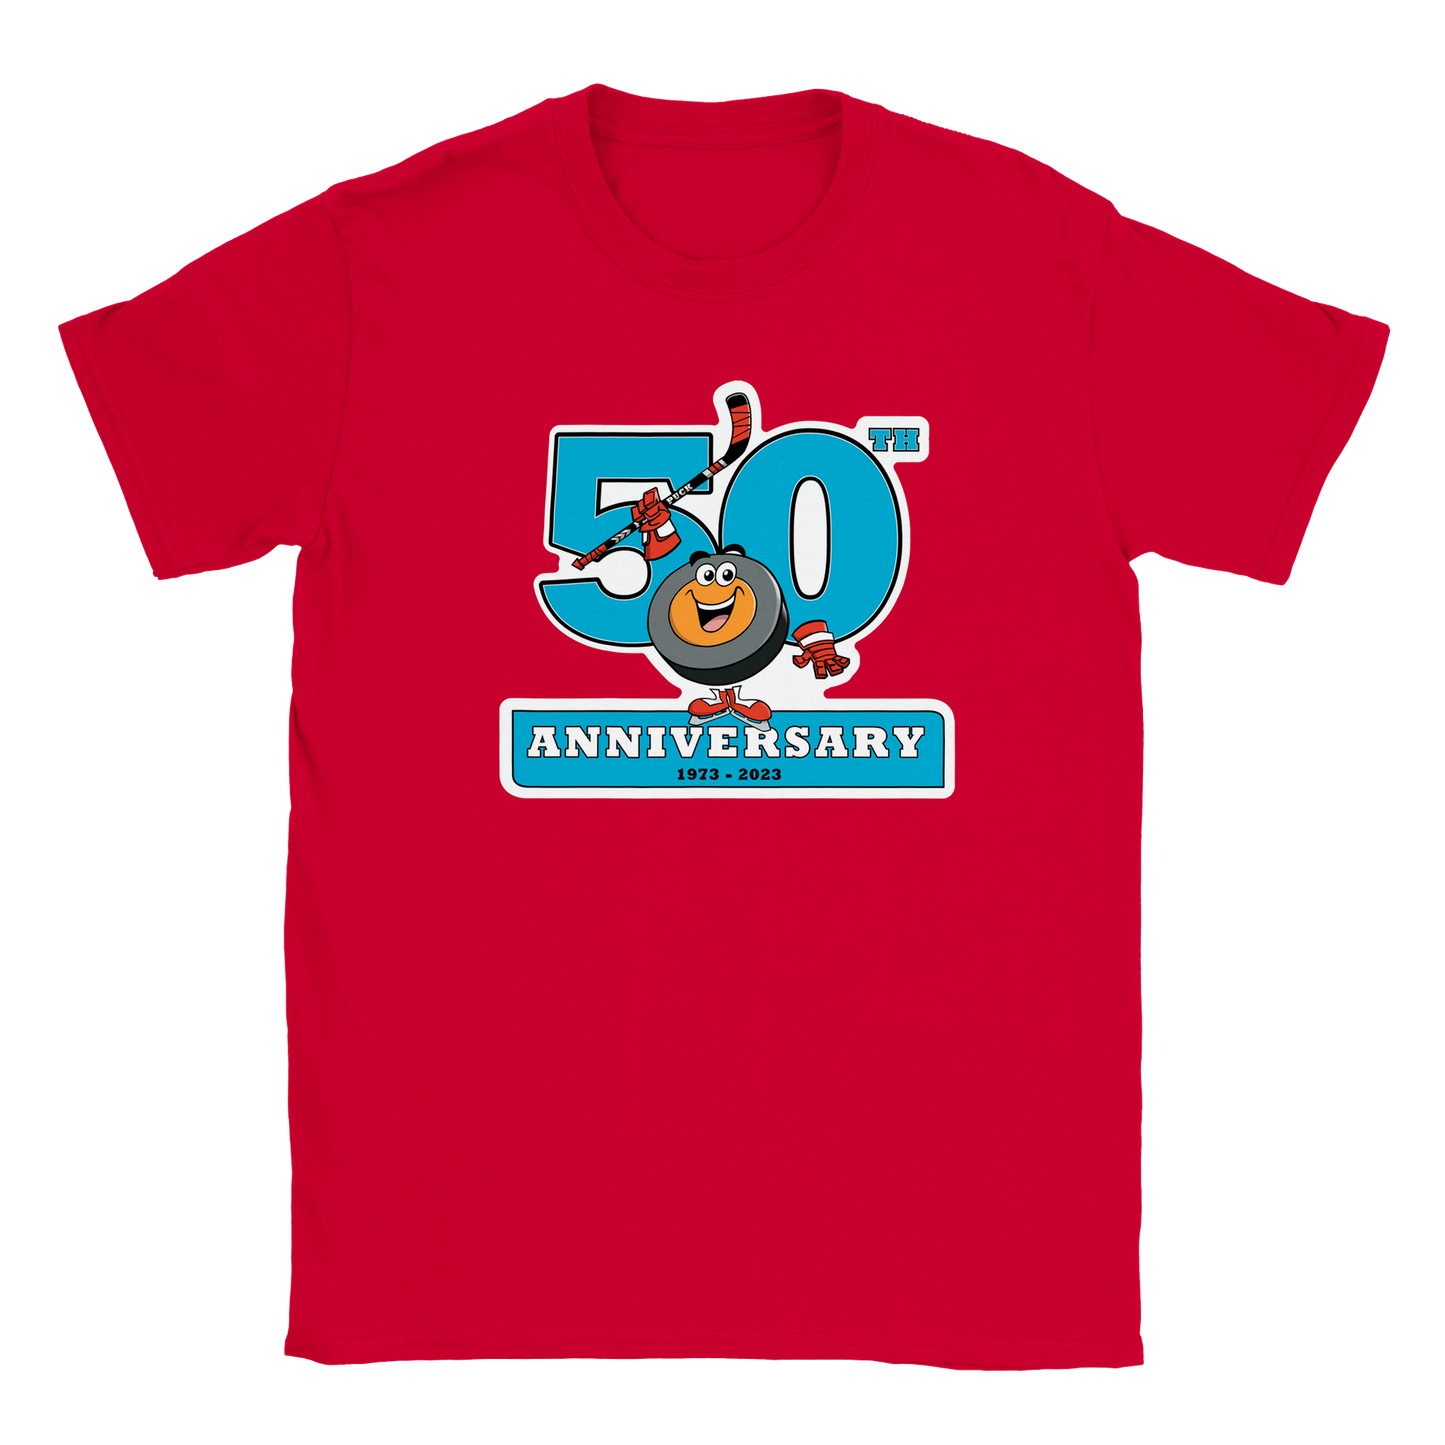 Peter's 50th Anniversary Classic Kids Crewneck T-shirt